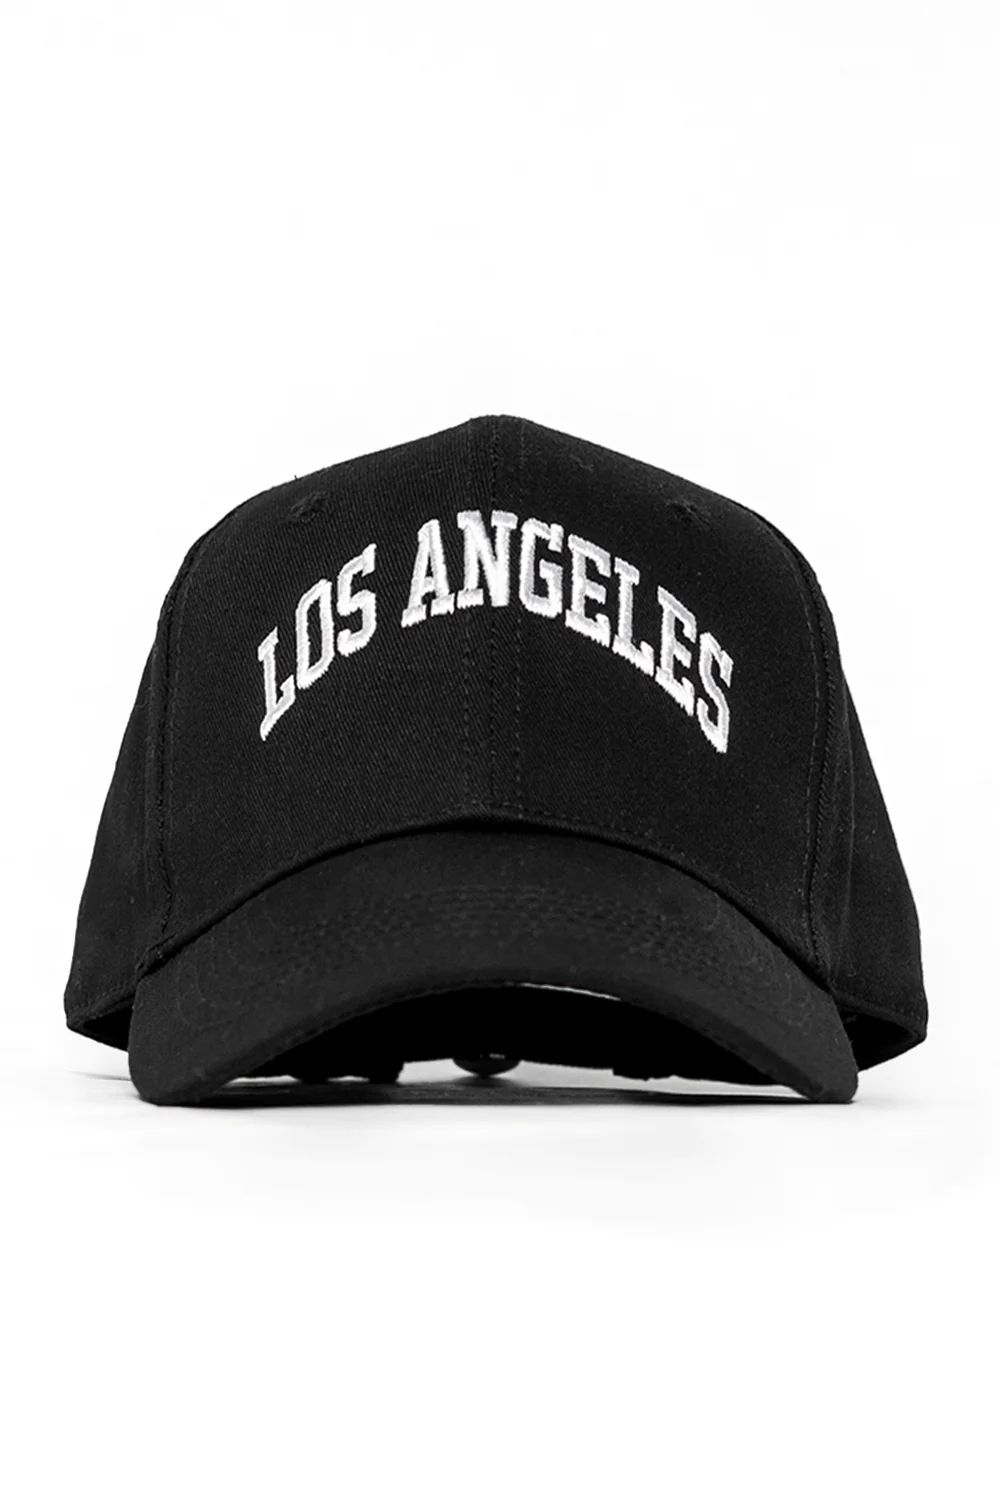 BALL CAP - Los Angeles | Los Angeles Trading Co